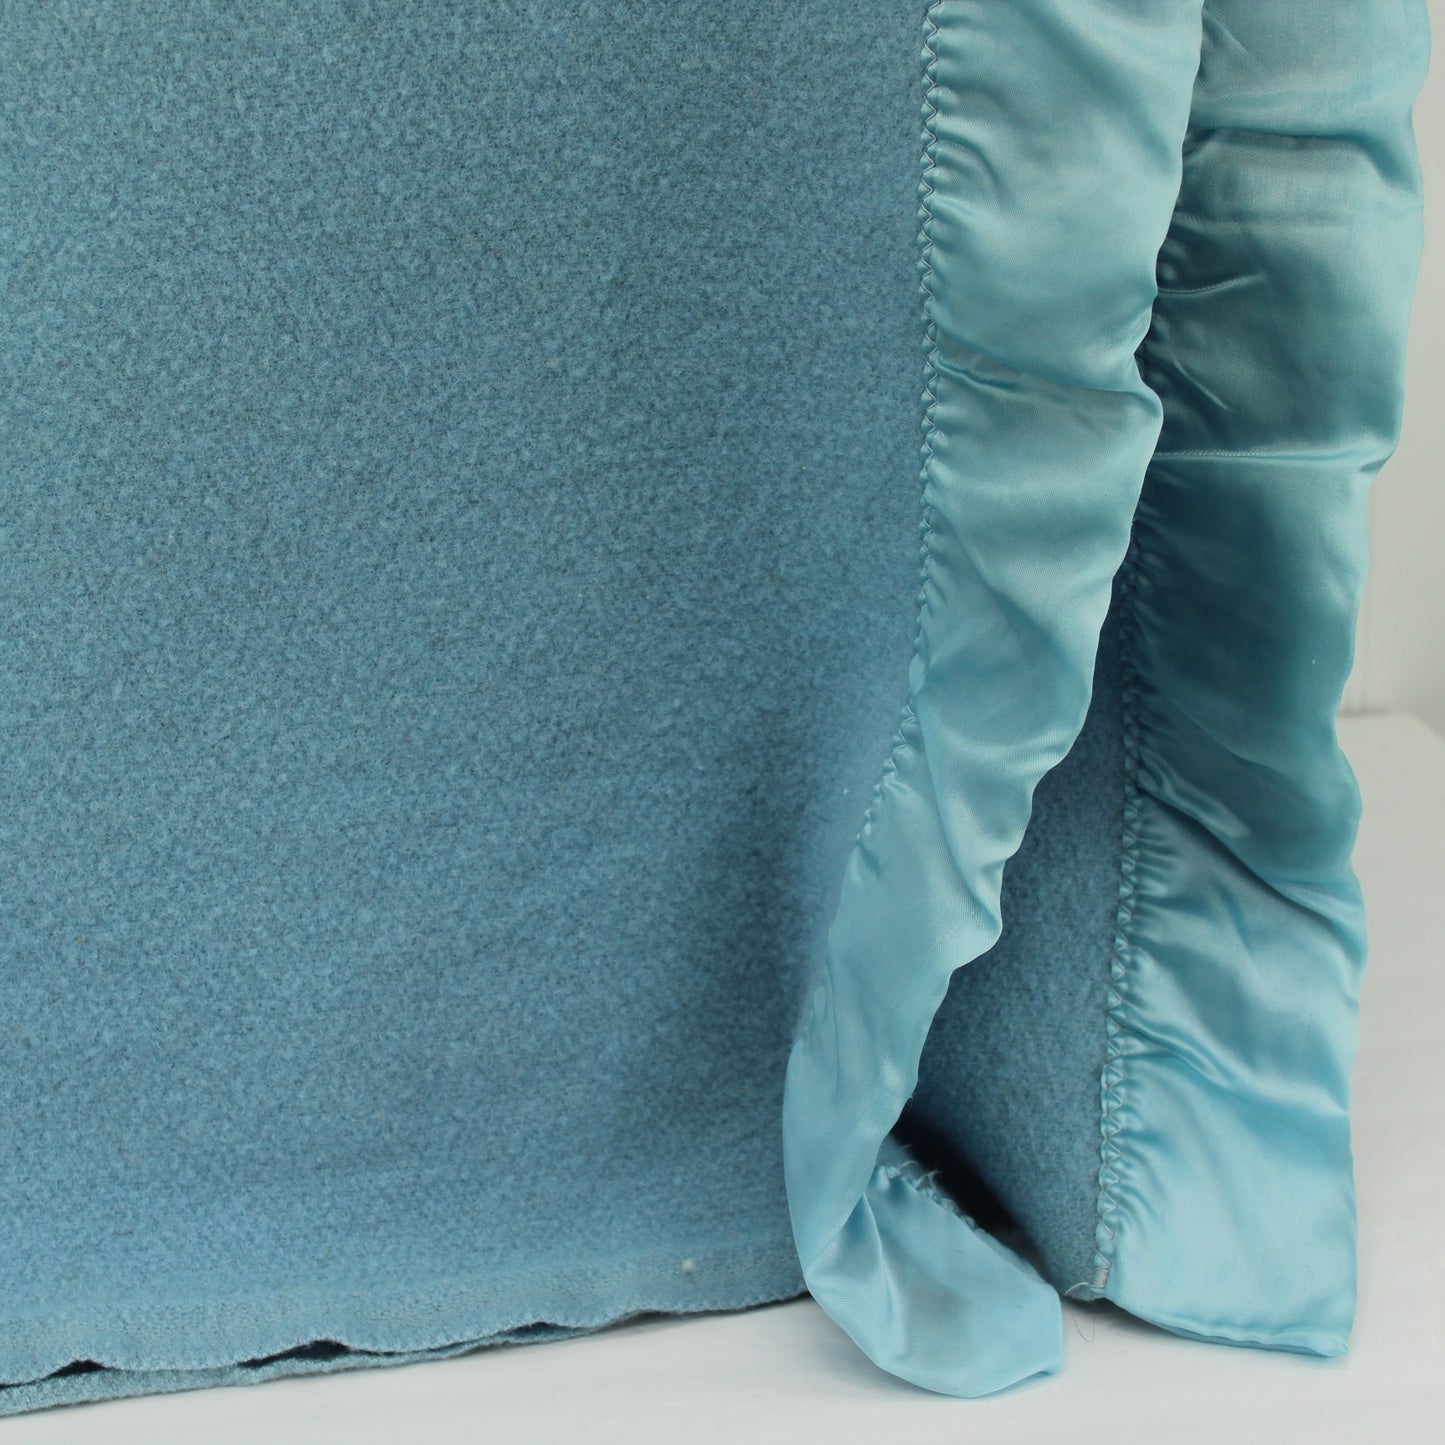 Copy of Faribo Wool Sky Blue Blanket Satin Binding 80" X 82" closeup view of blanket corner